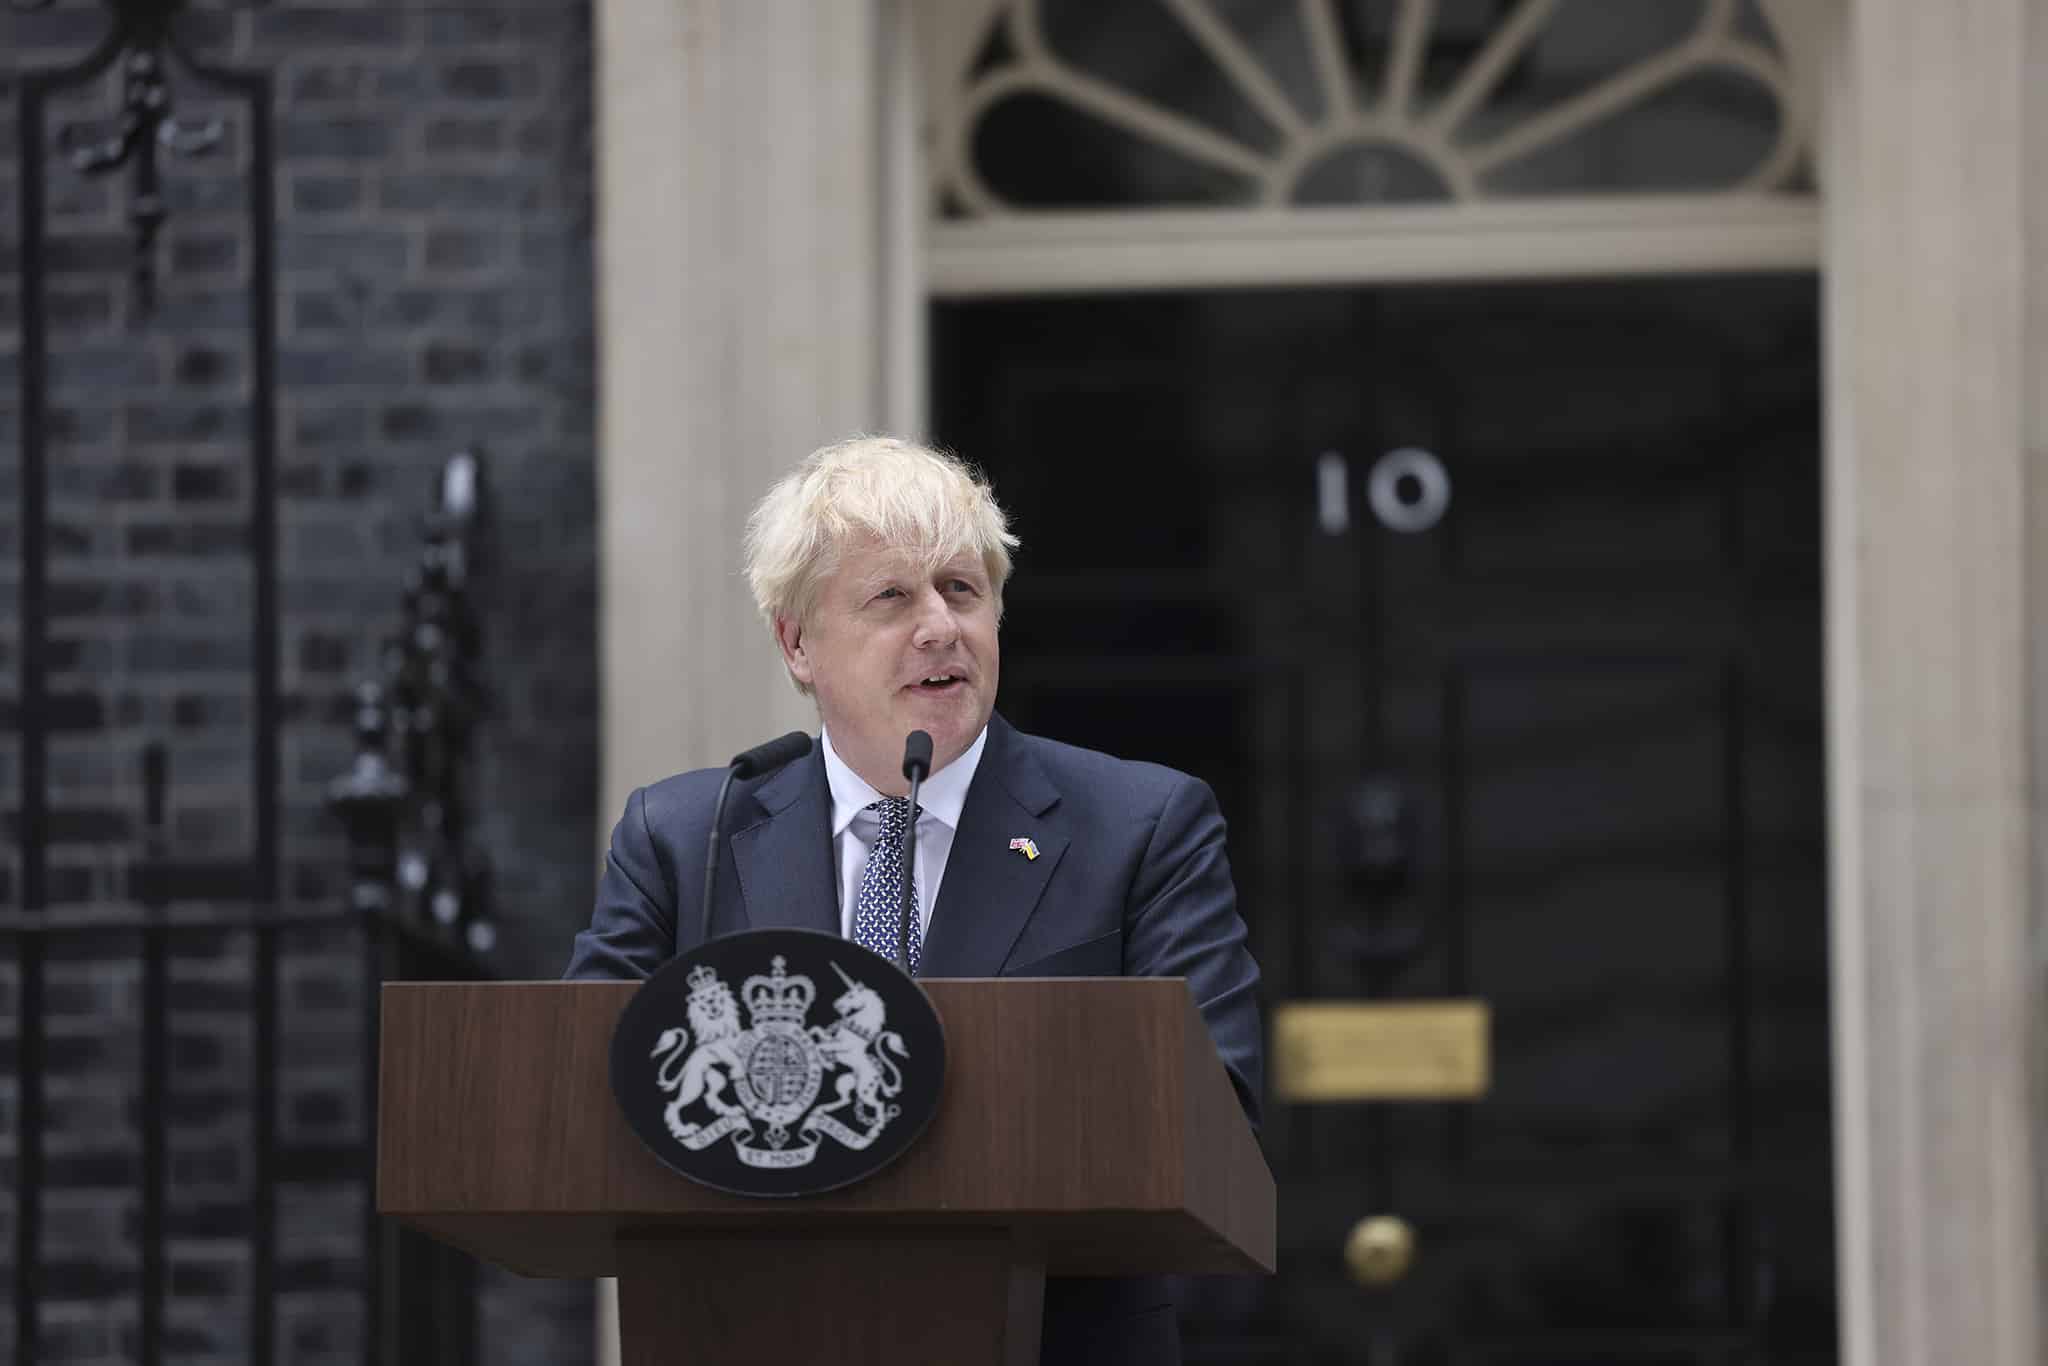 Parlamento britânico pune Boris Johnson por mentir sobre caso “partygate”